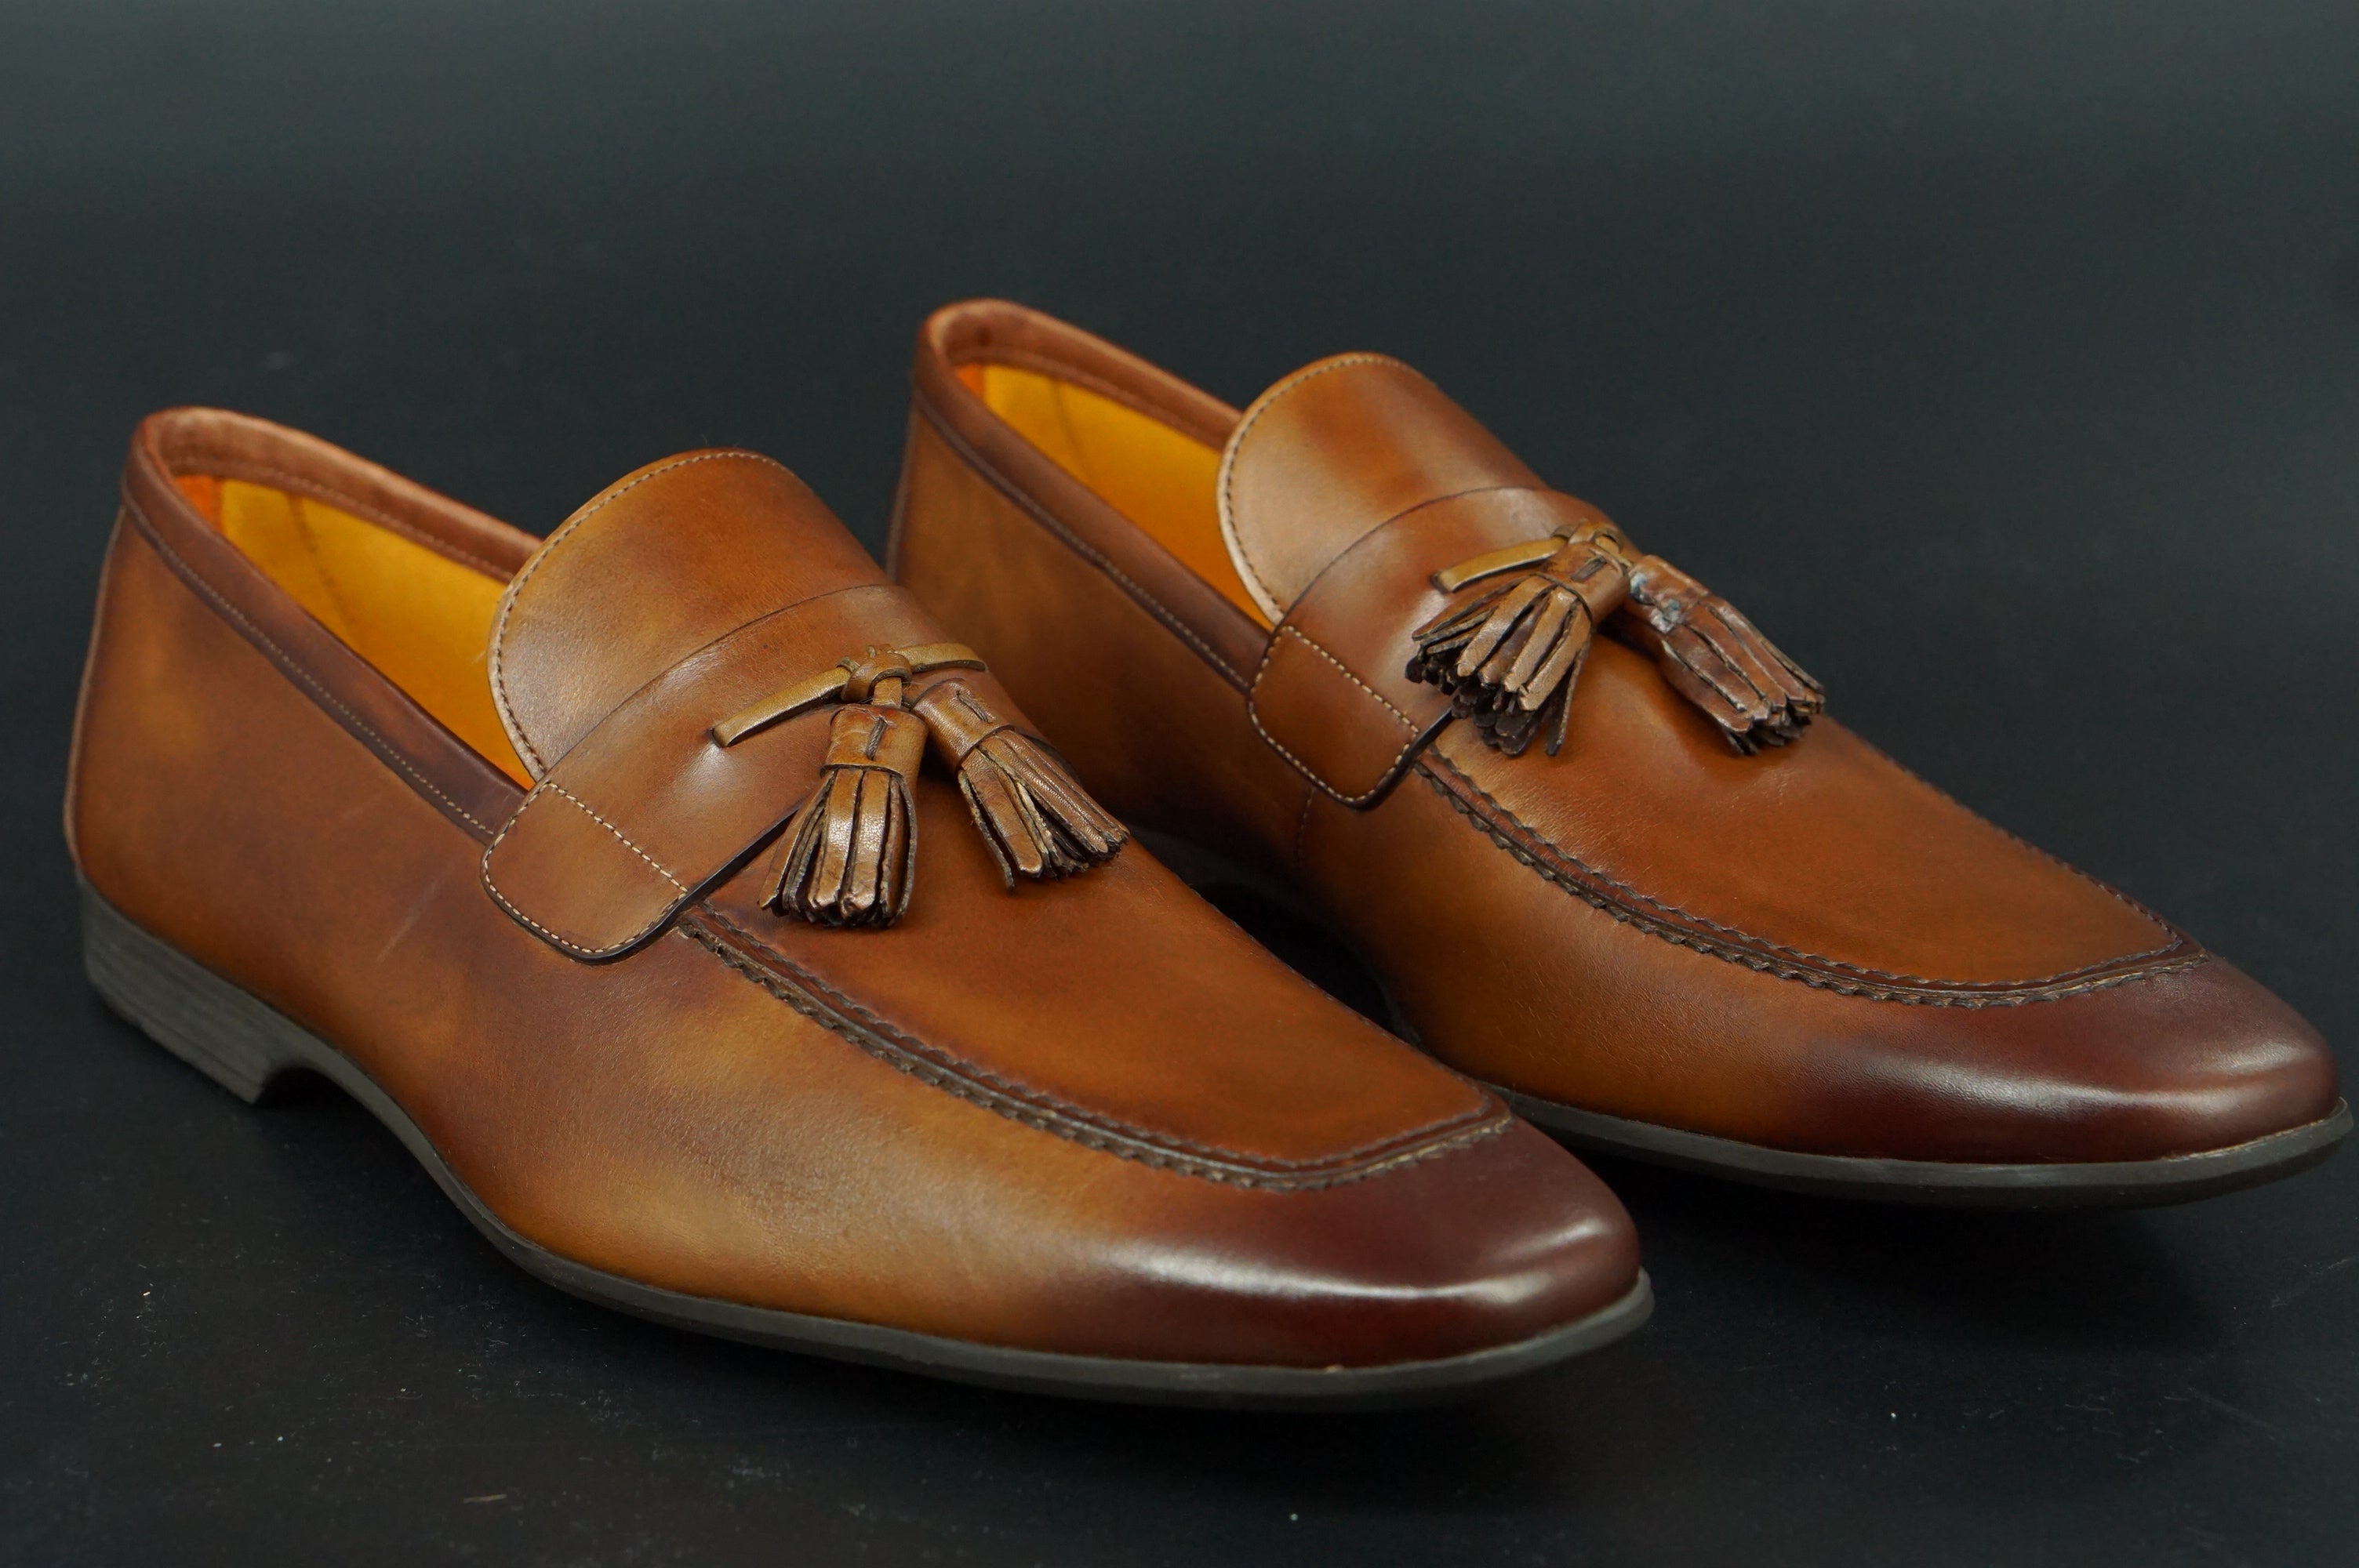 Magnanni Kamato Tassel Loafers SZ 12 Tobaco brown Leather $350 Slip On NIB